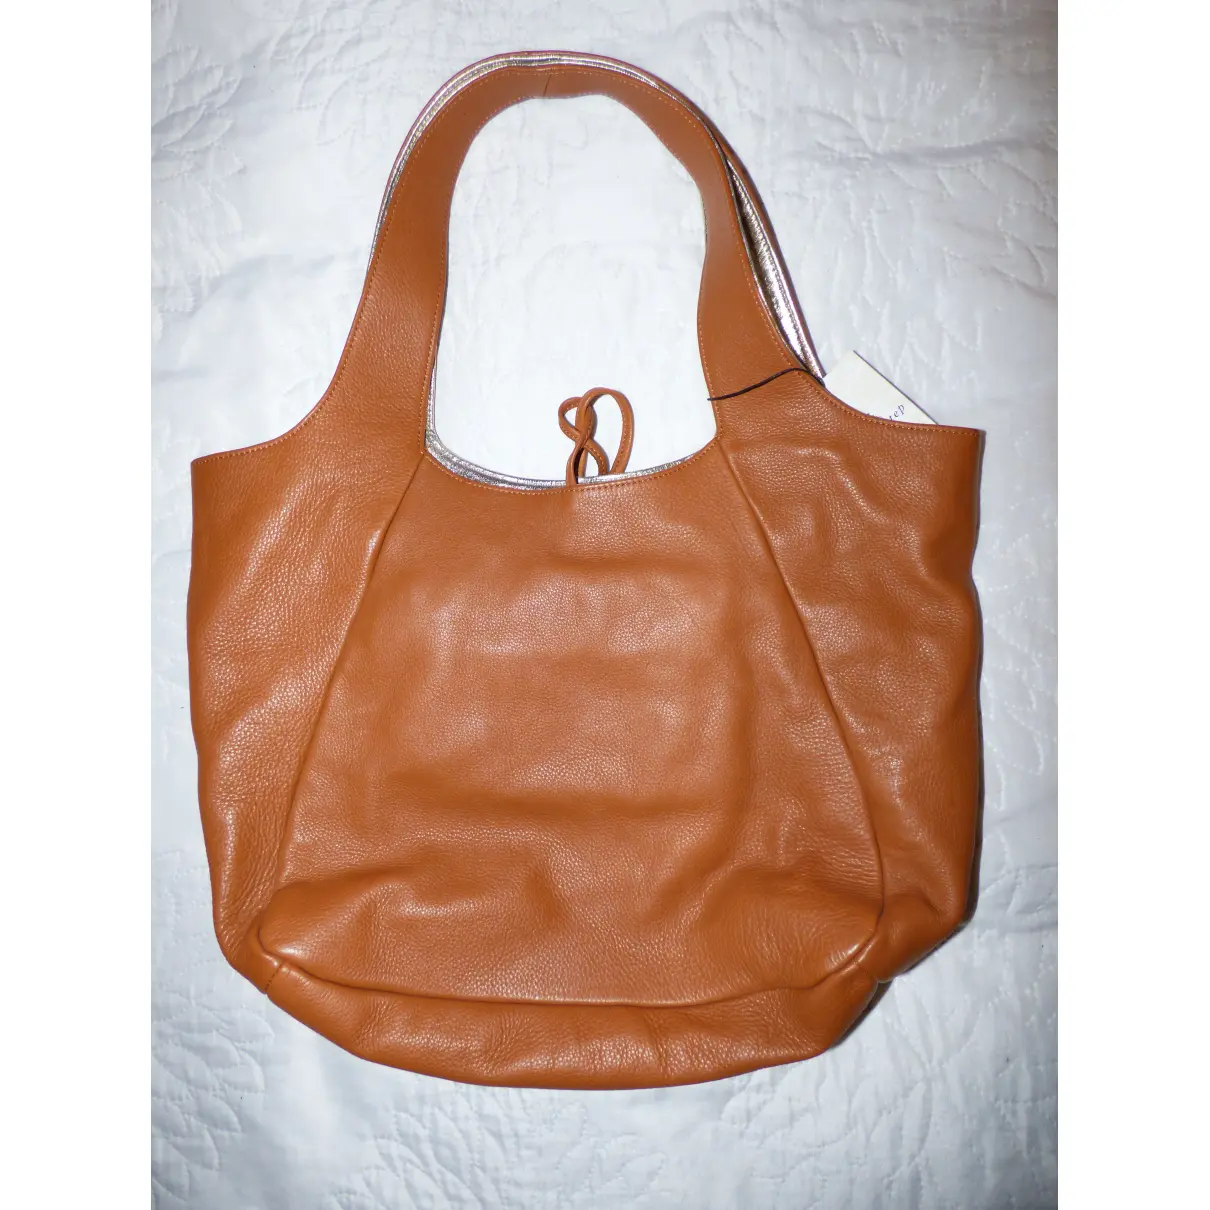 Buy ONE STEP Leather handbag online